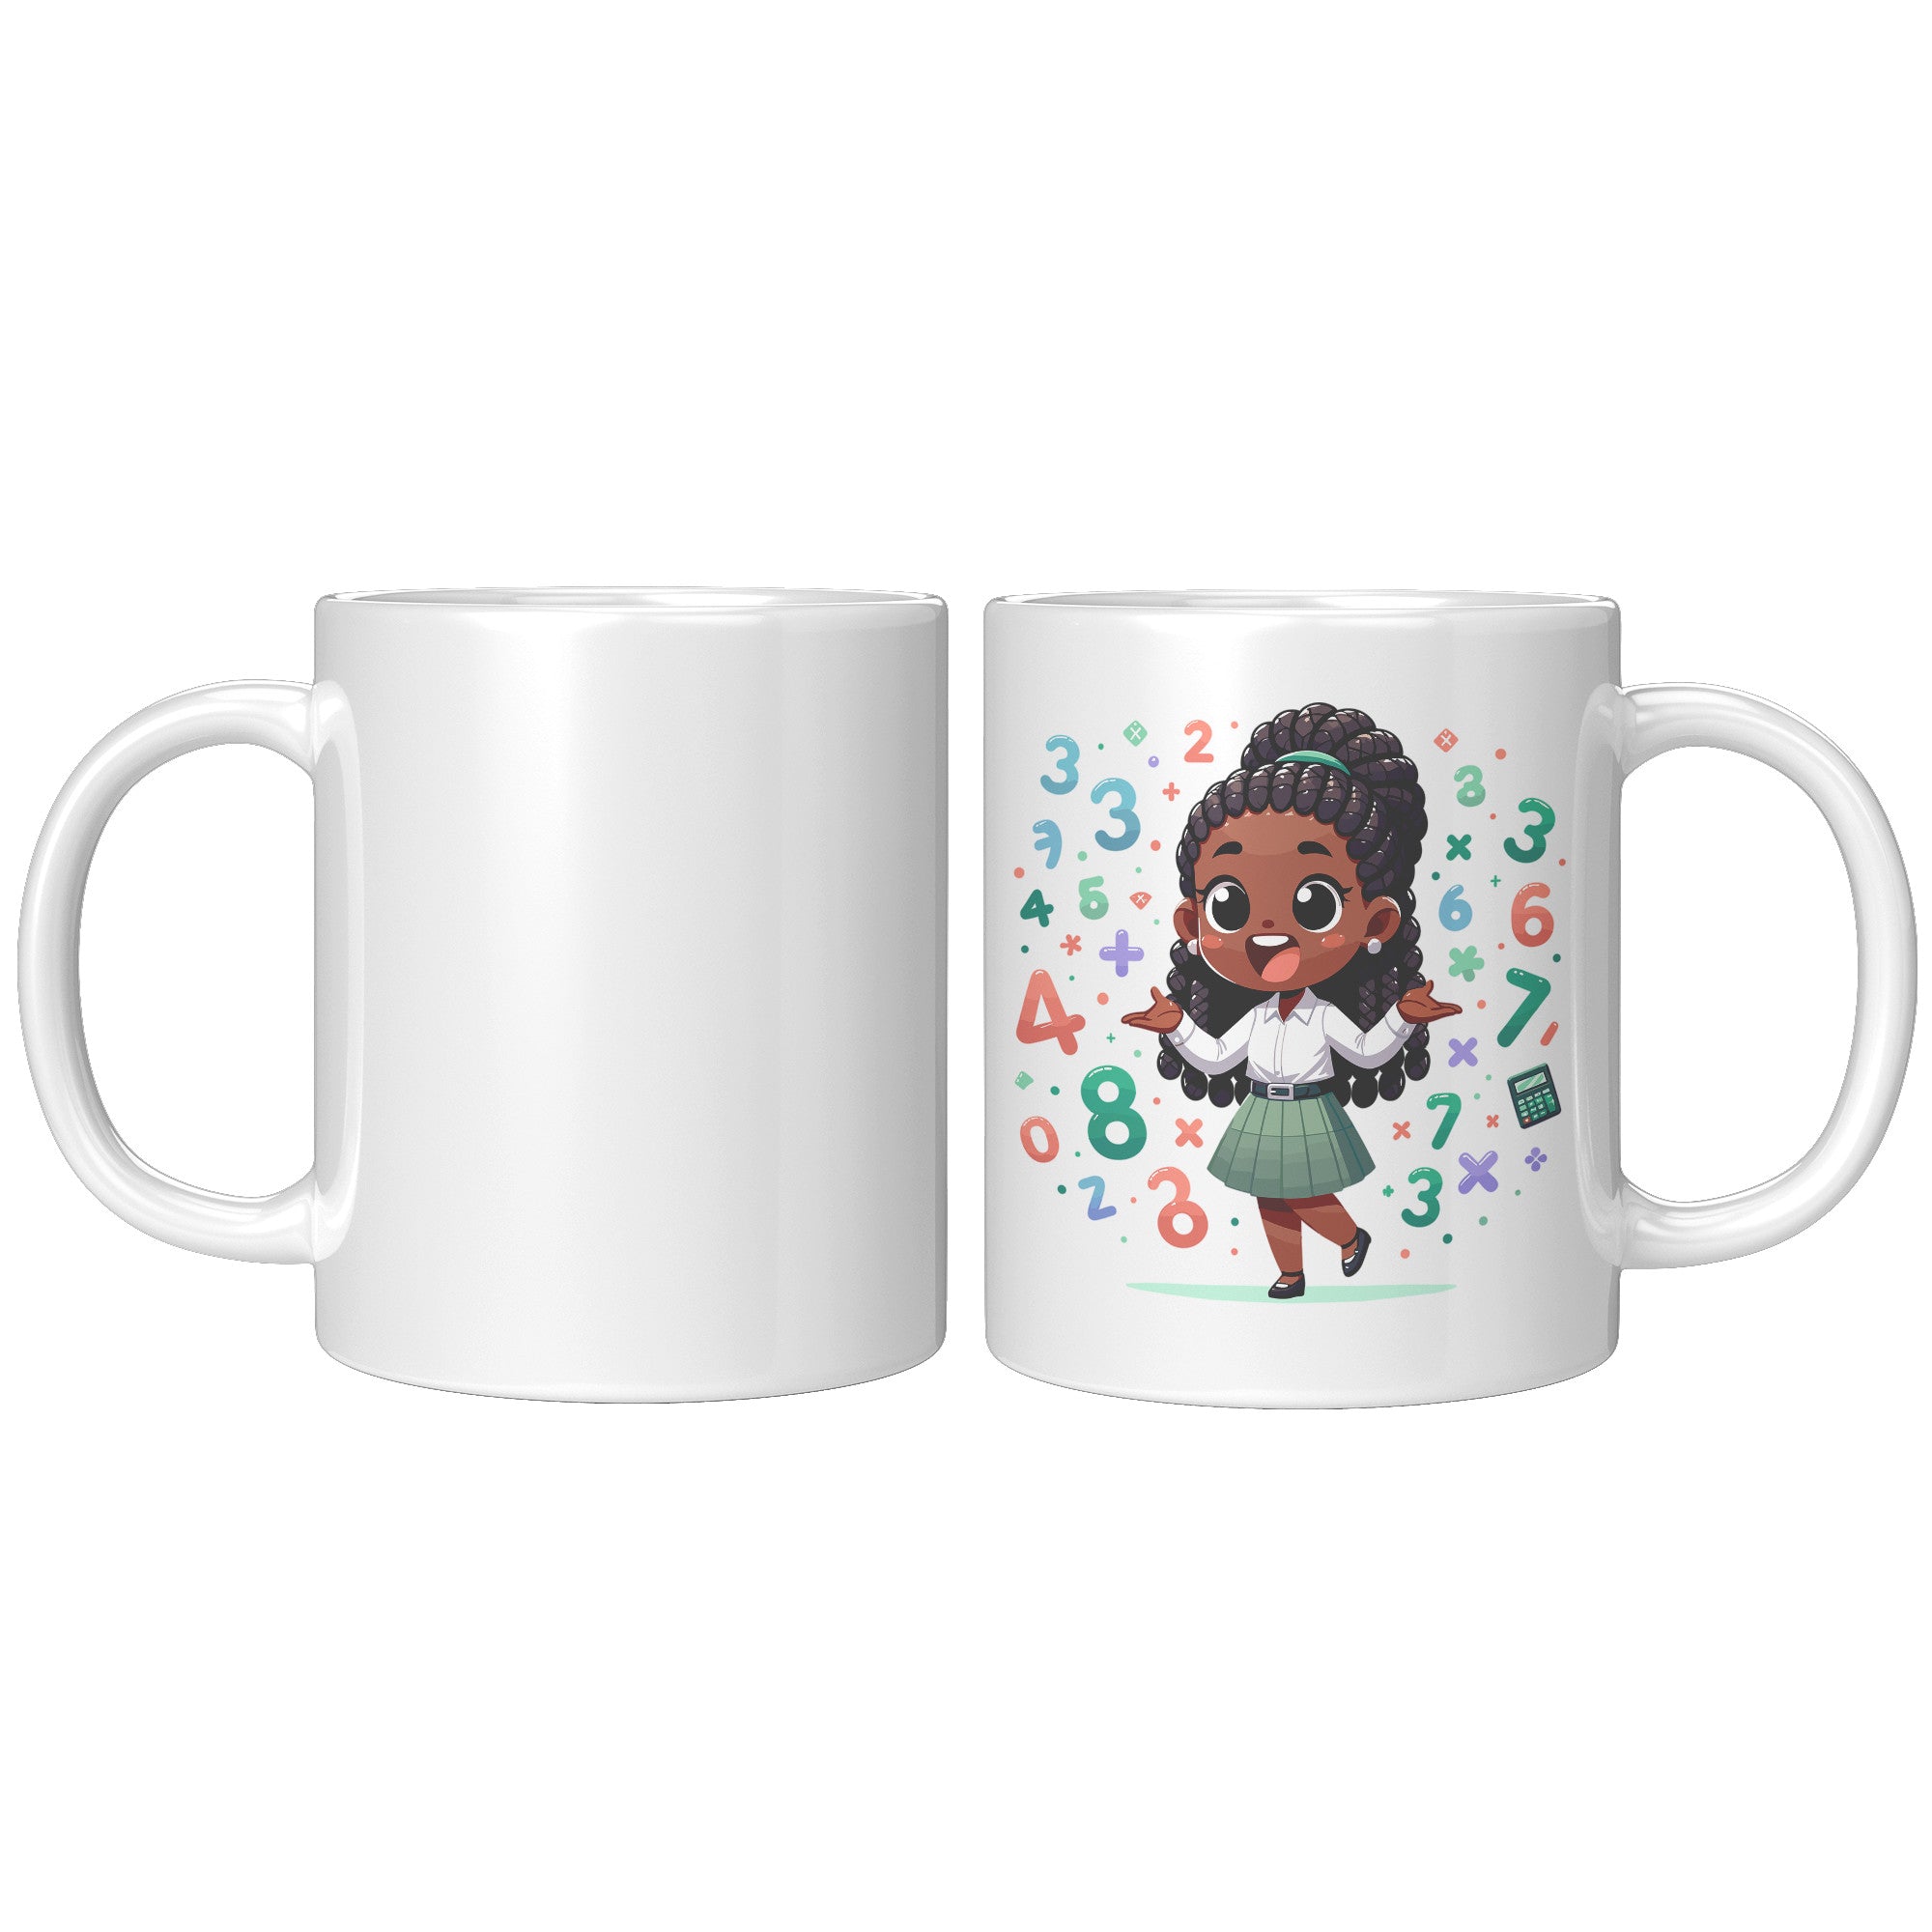 11oz Custom Teacher's Delight Coffee Mug - Cartoon Educator Design - Heartwarming Gift for Teachers - Perfect for Daily Inspiration!